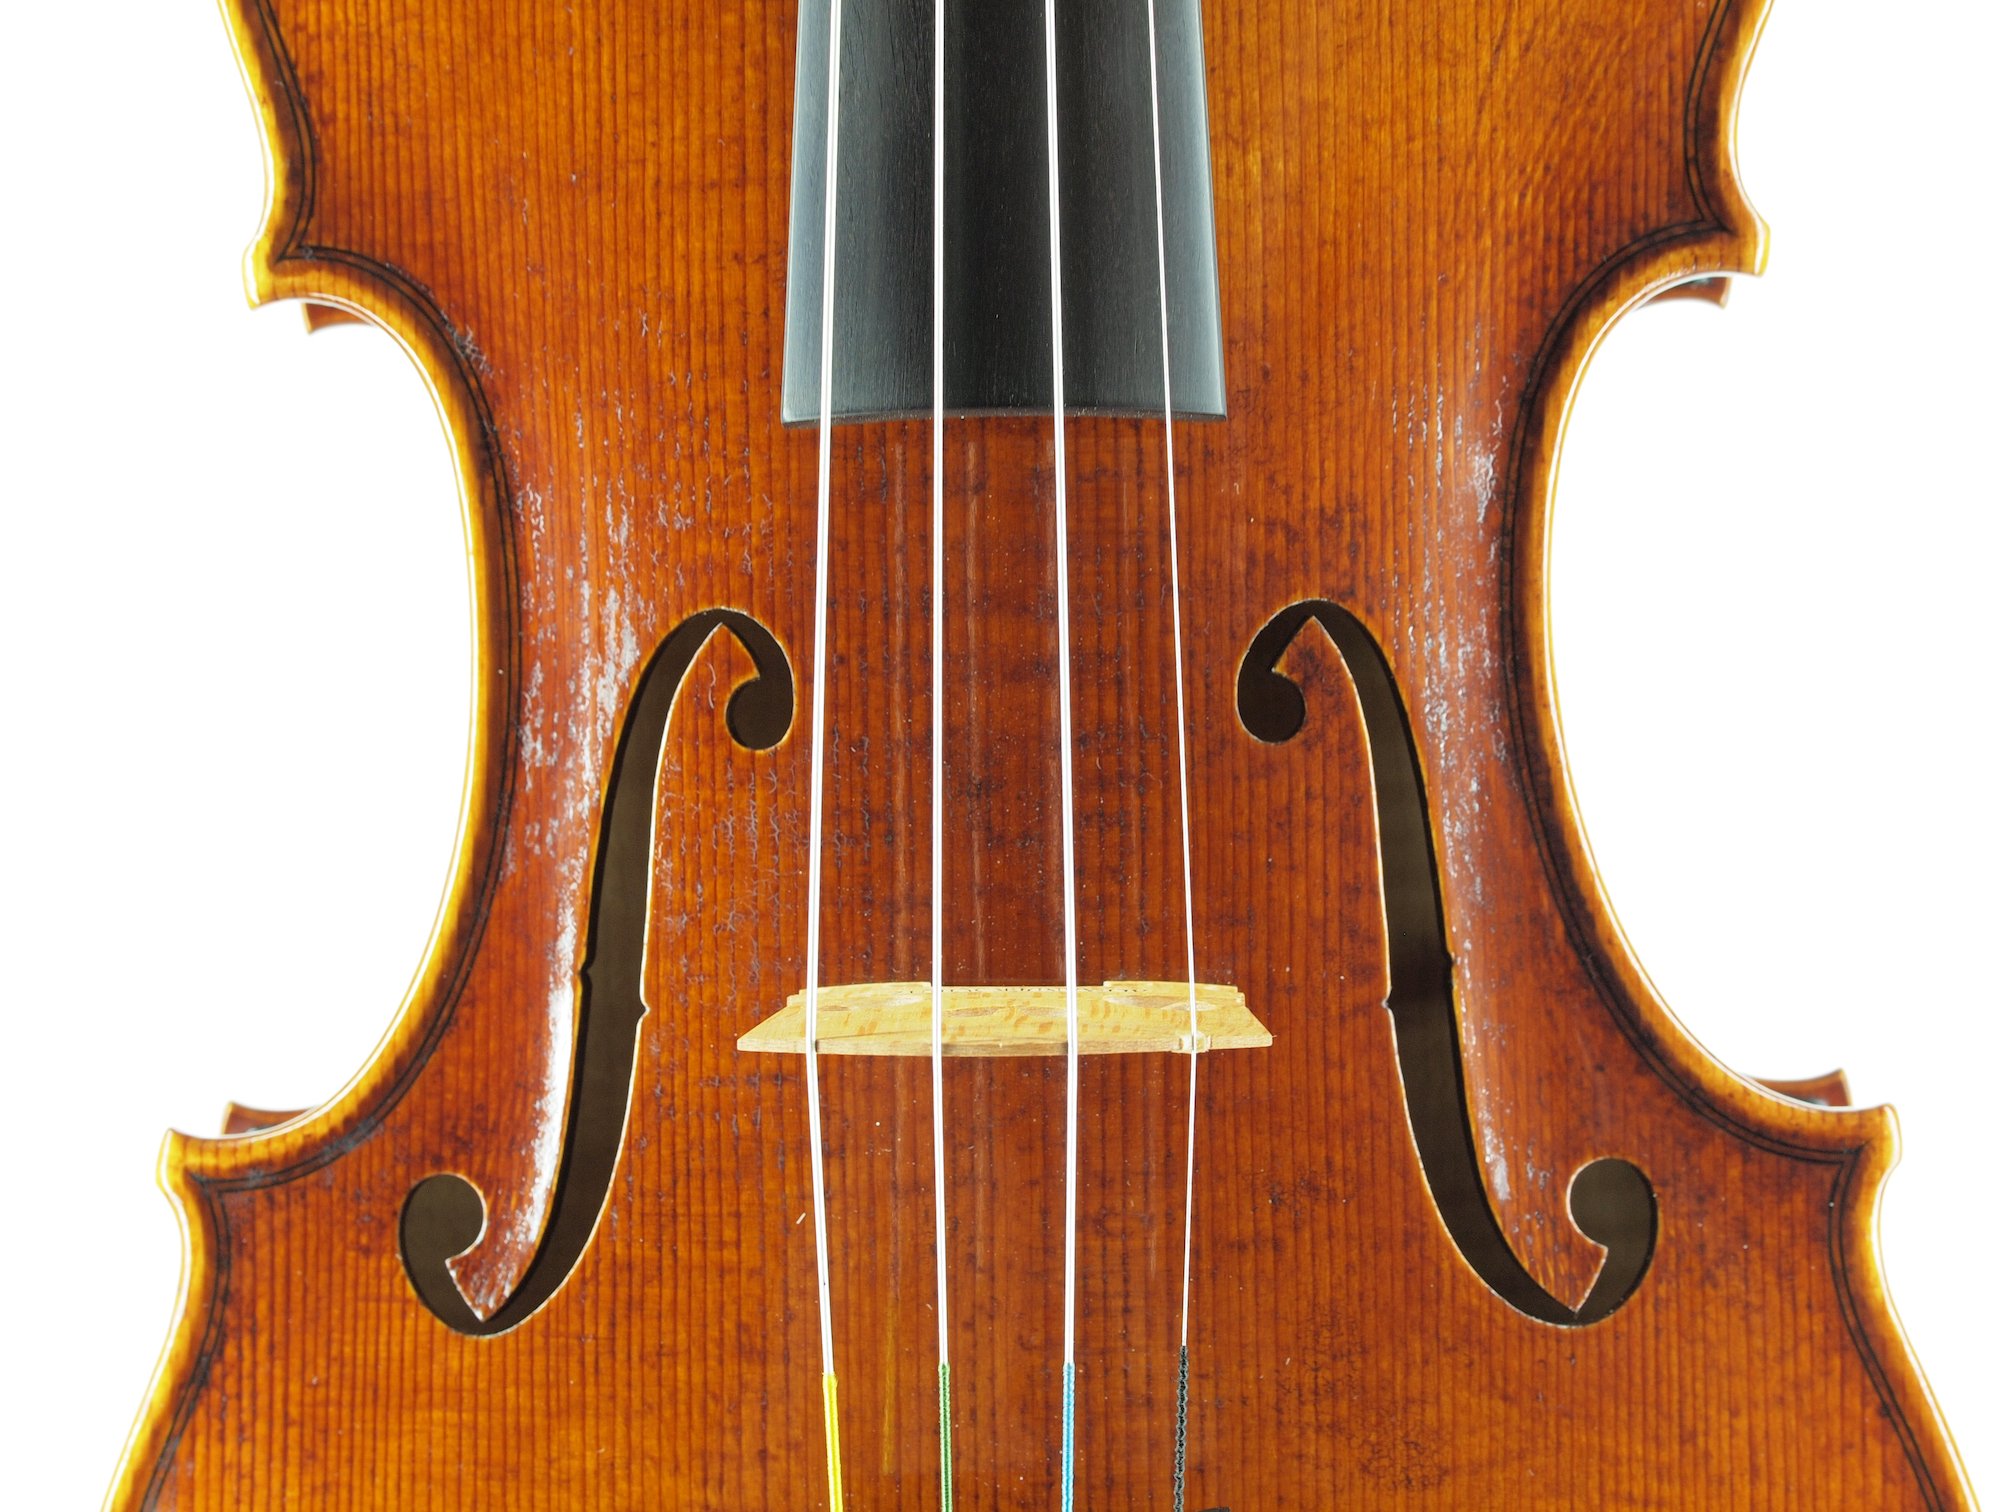 Violin based on the model of the "Sauret" Guarneri del Gesu anno 1743